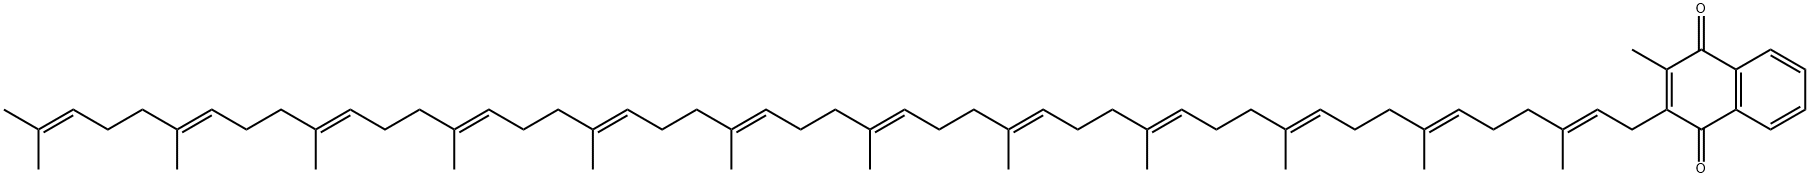 2-Methyl-3-[(2E,6E,10E,14E,18E,22E,26E,30E,34E,38E,42E)-3,7,11,15,19,23,27,31,35,39,43,47-dodecamethyl-2,6,10,14,18,22,26,30,34,38,42,46-octatetracontadodecenyl]-1,4-naphthalenedione|